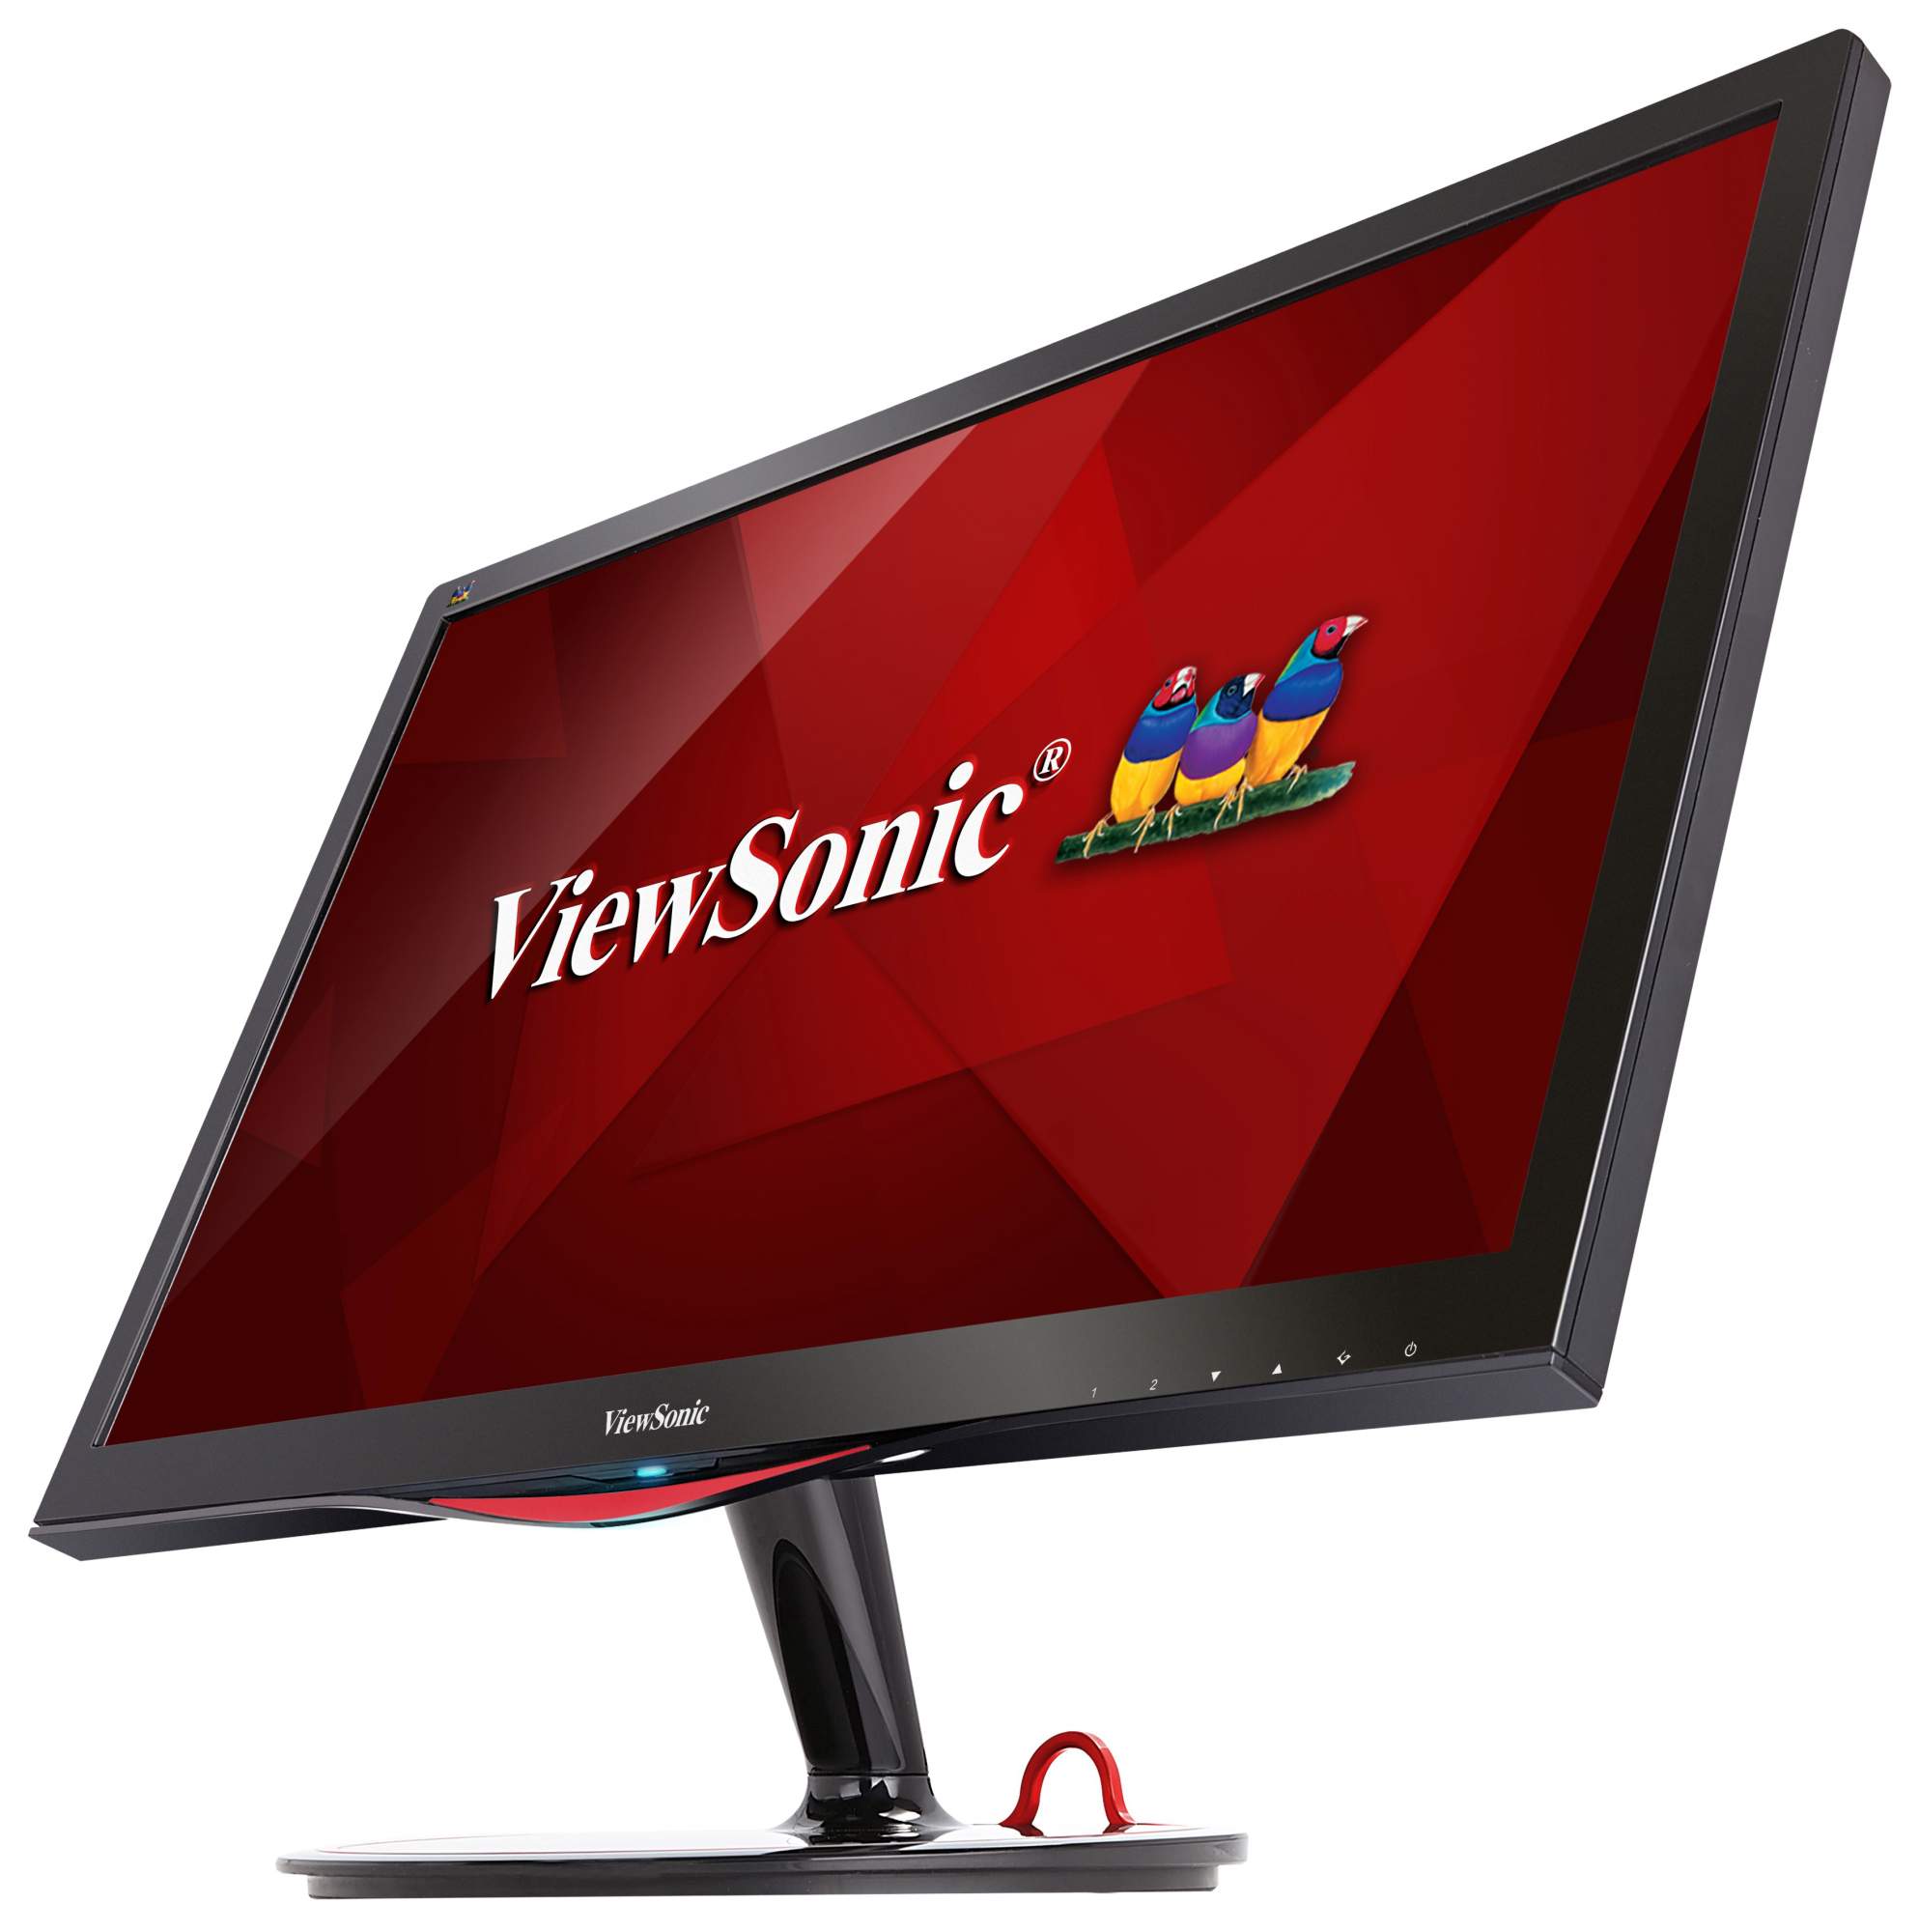 Монитор ViewSonic VS16263 Red/Black (VX2458-MHD)